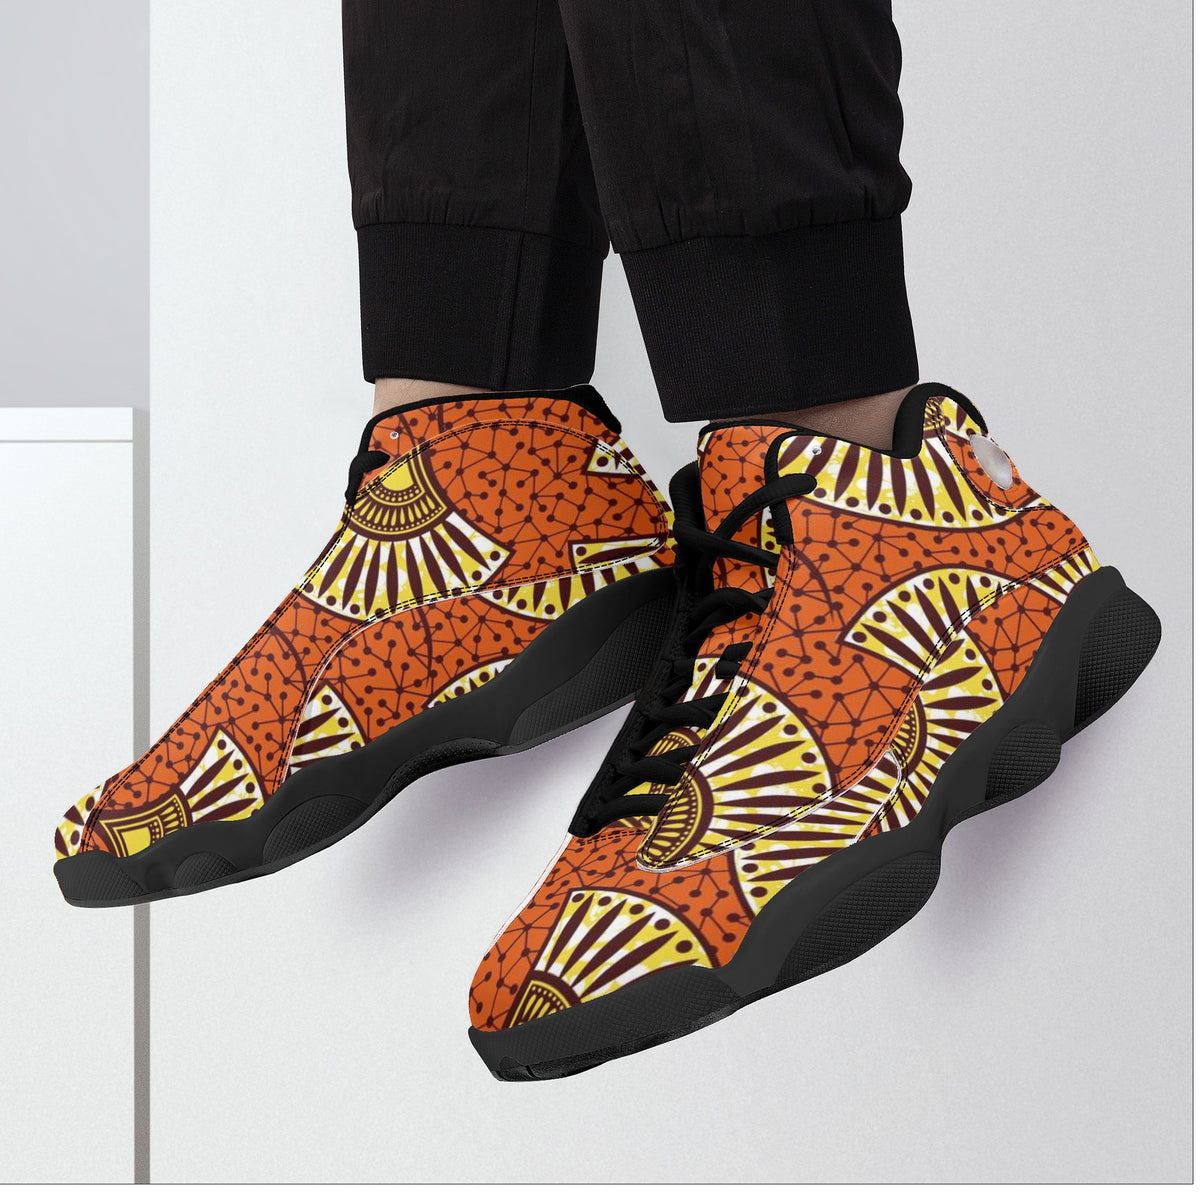 Men's Black Soles Basketball Shoes Popcustoms